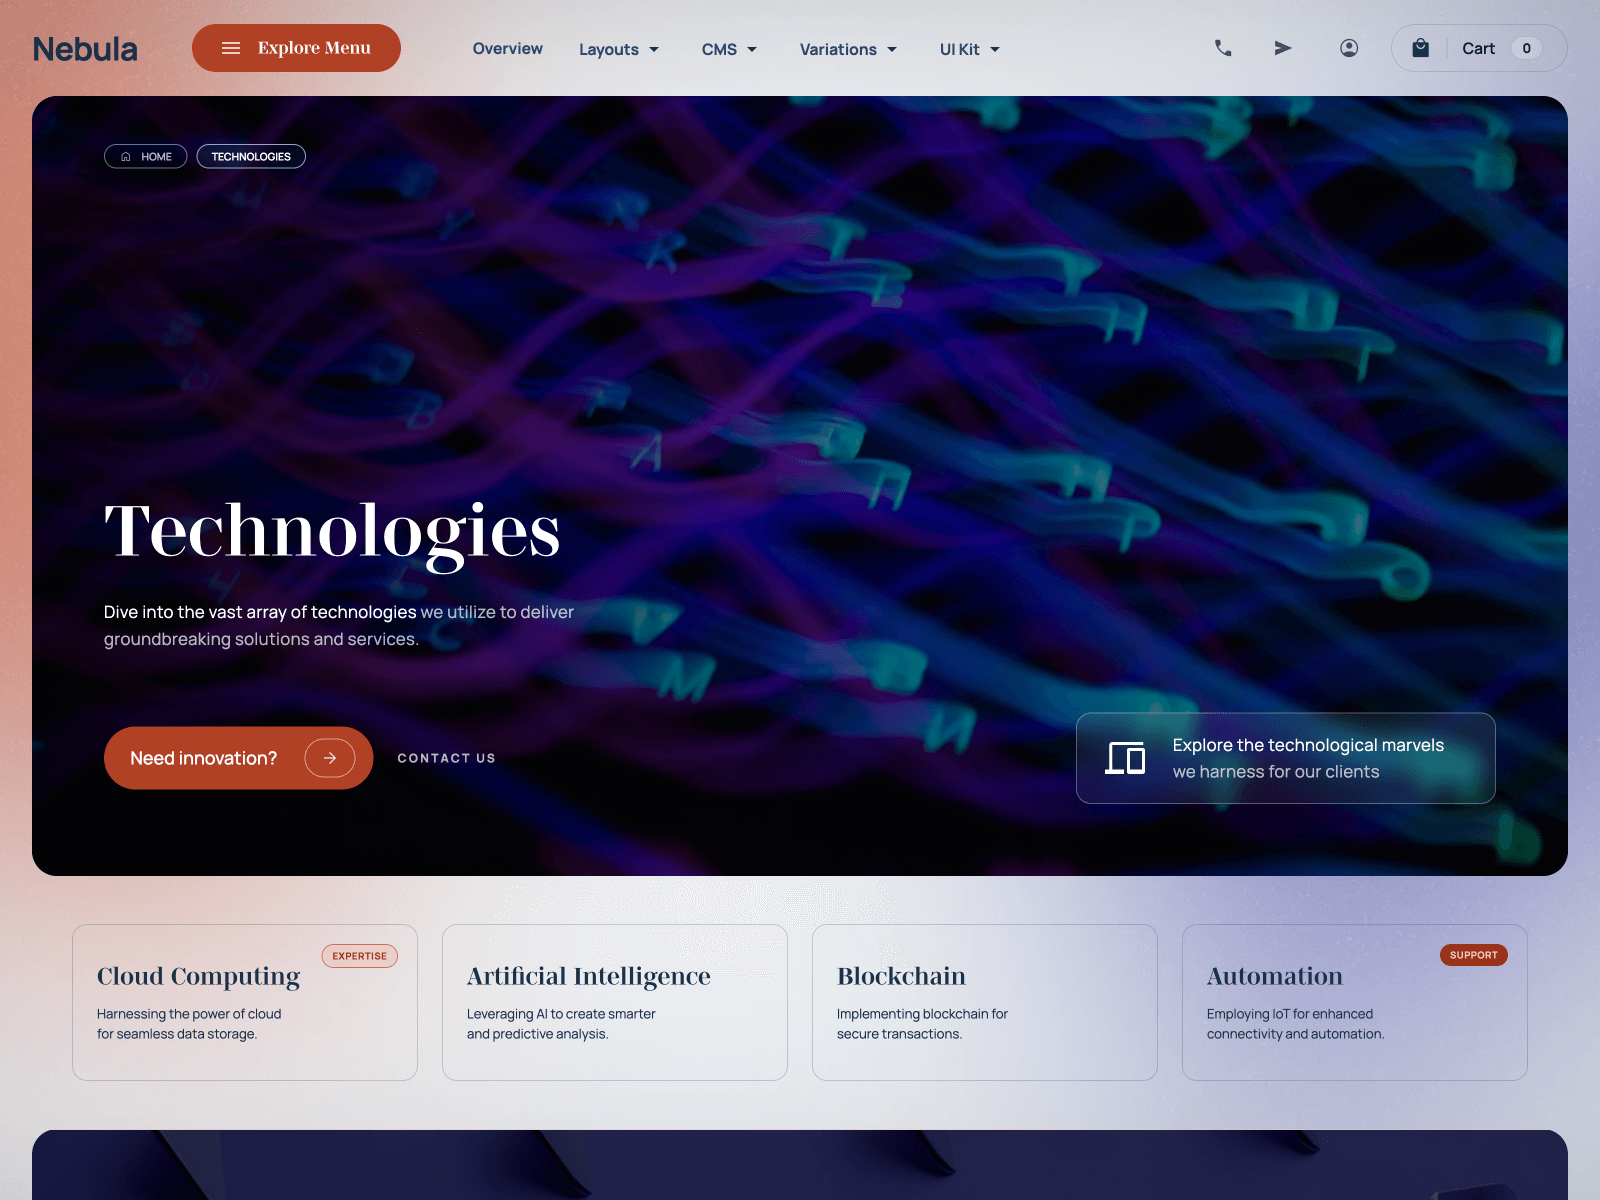 Hero Image Designs - Technology startup template Nebula